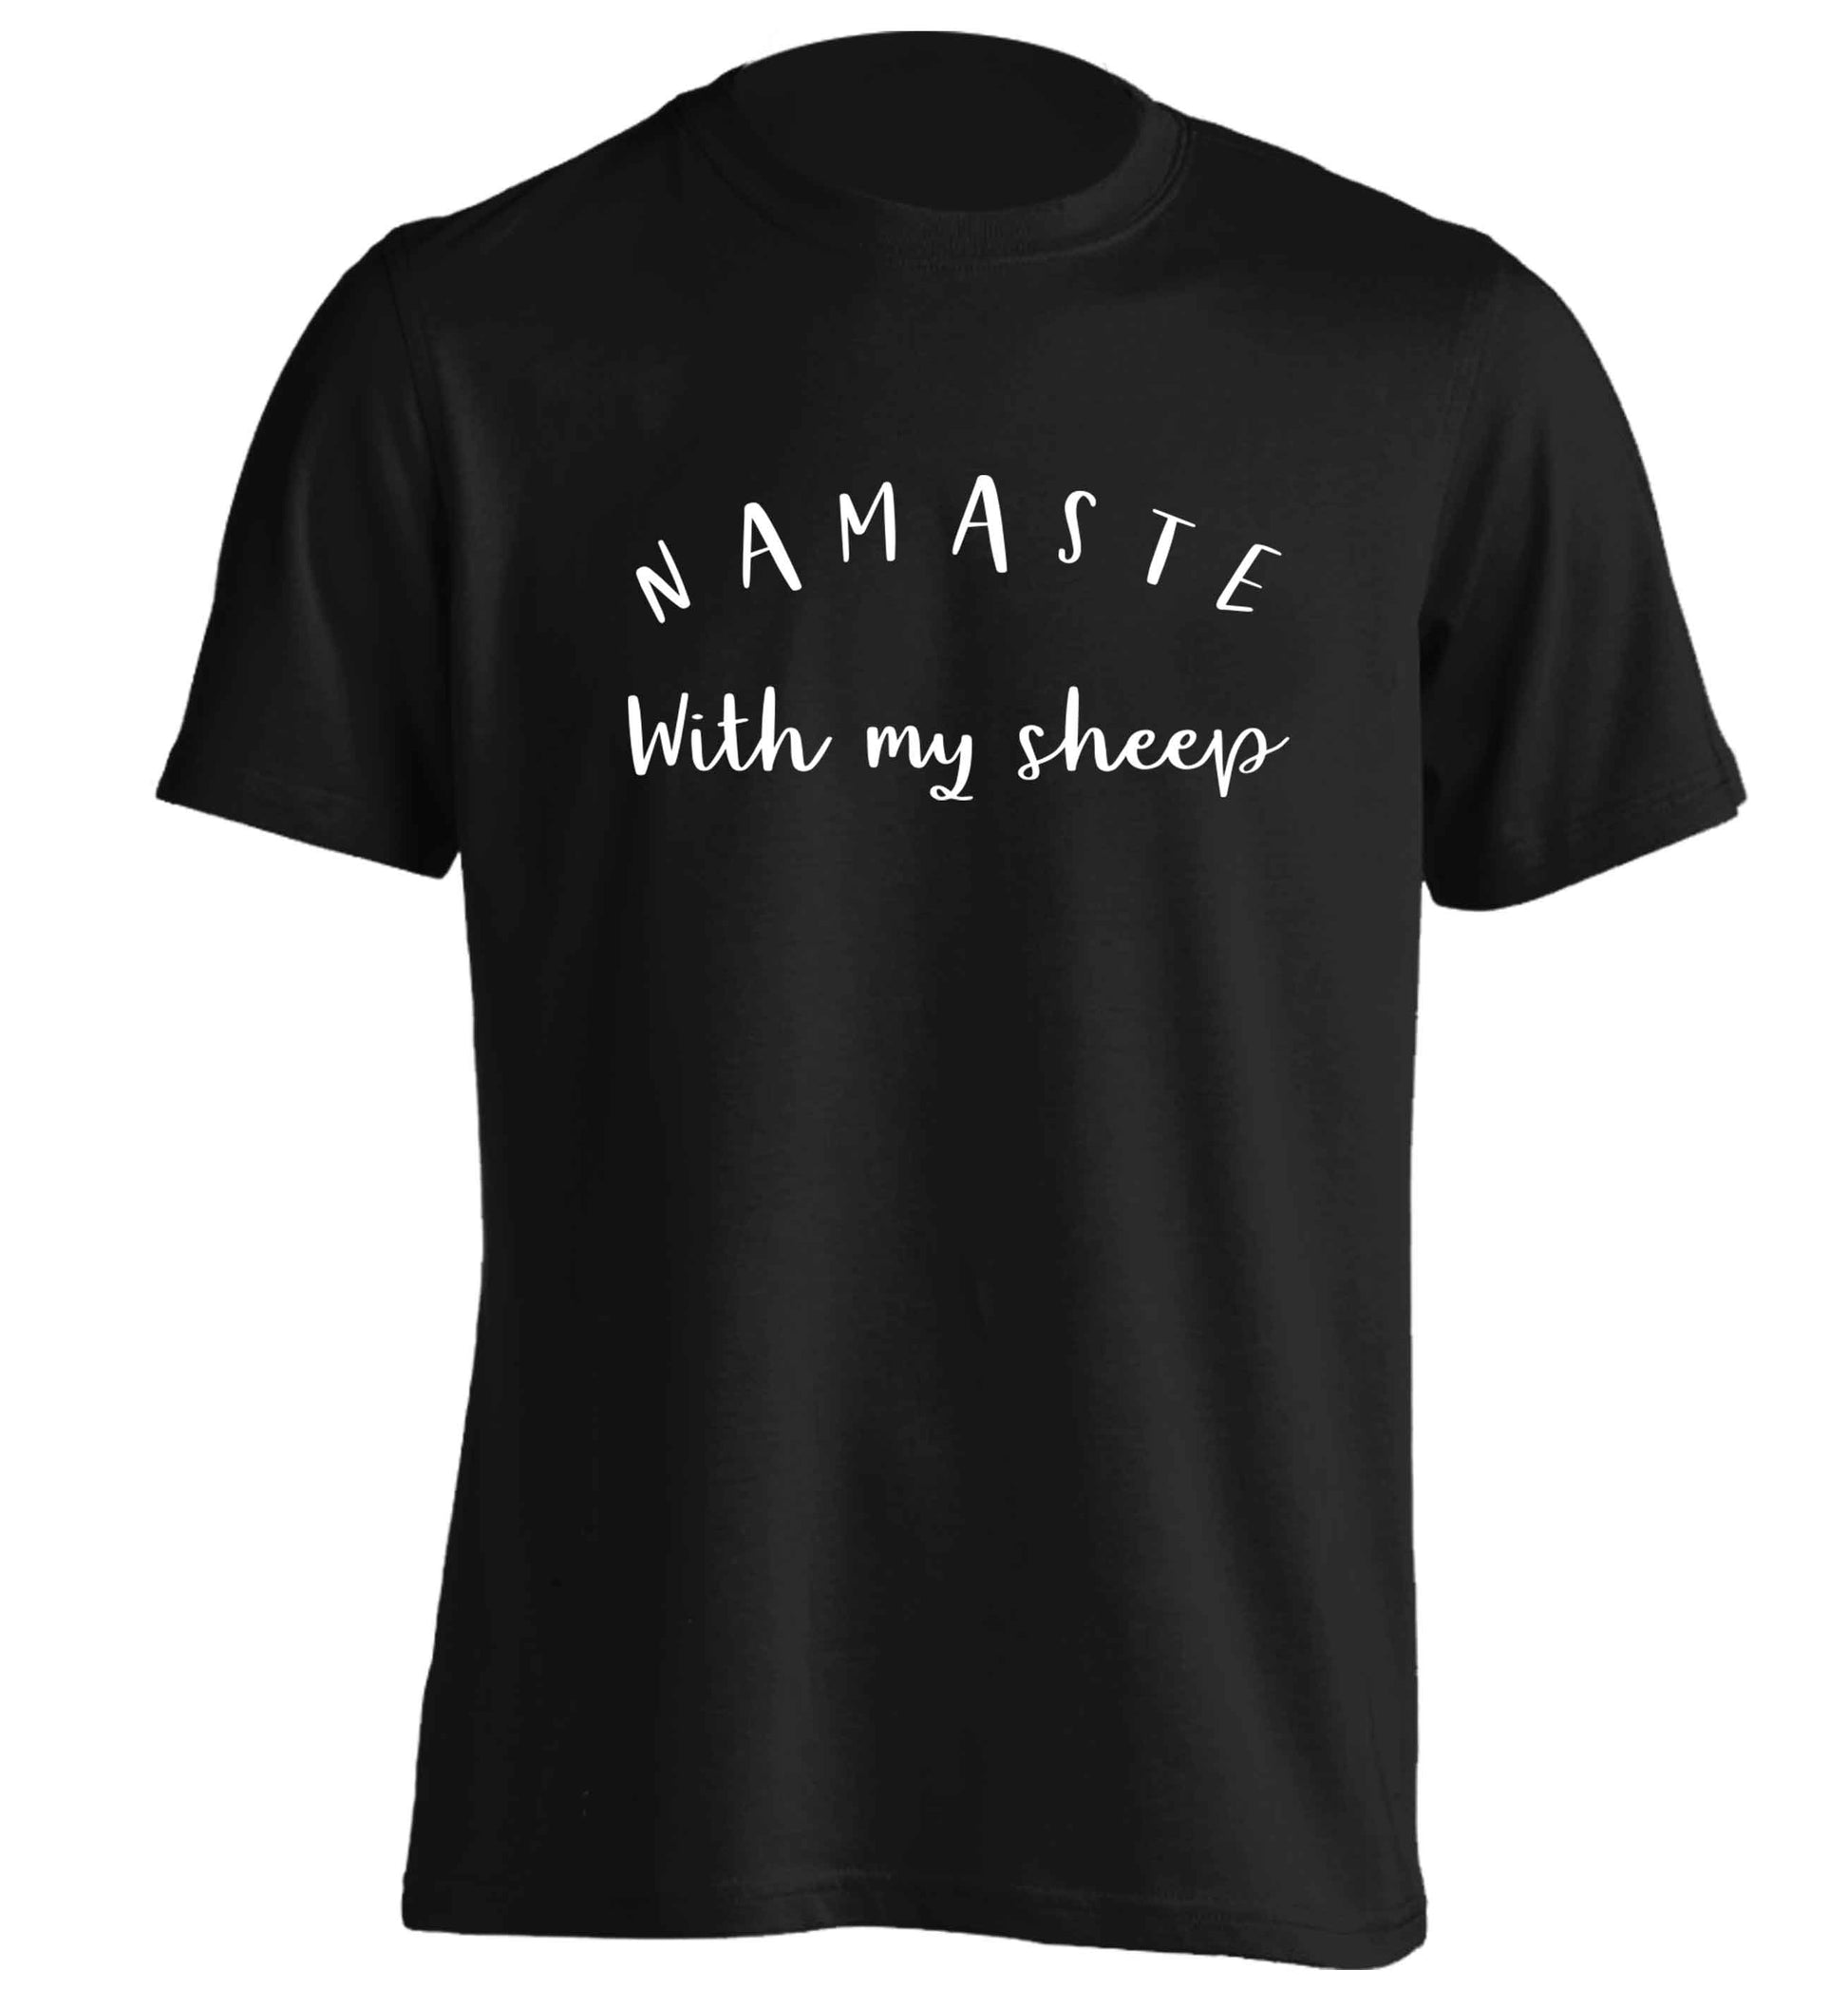 Namaste with my sheep adults unisex black Tshirt 2XL